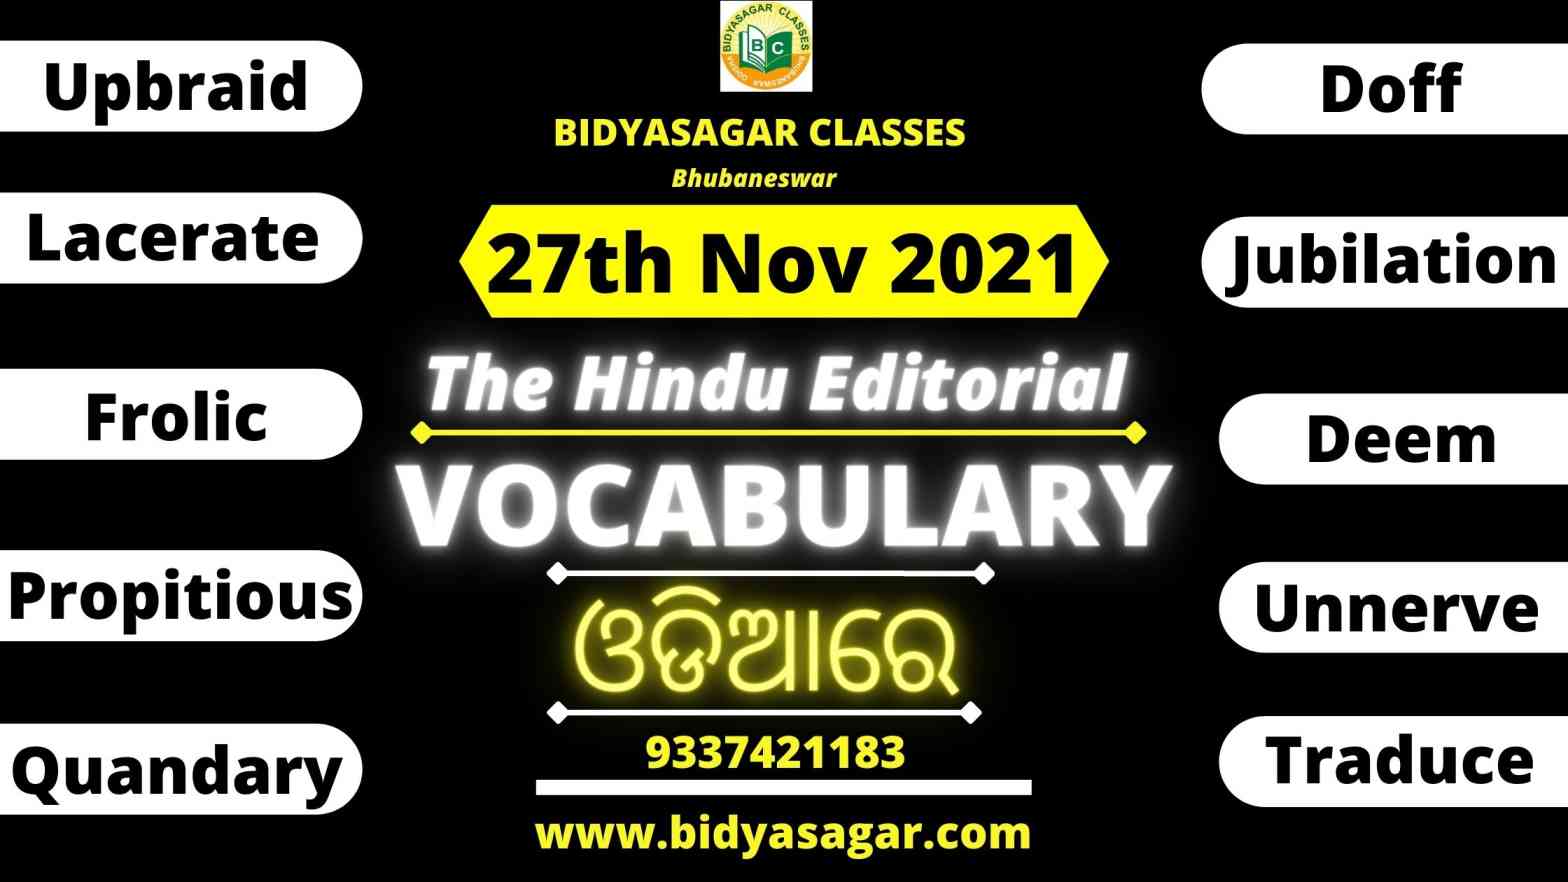 The Hindu Editorial Vocabulary of 27th November 2021